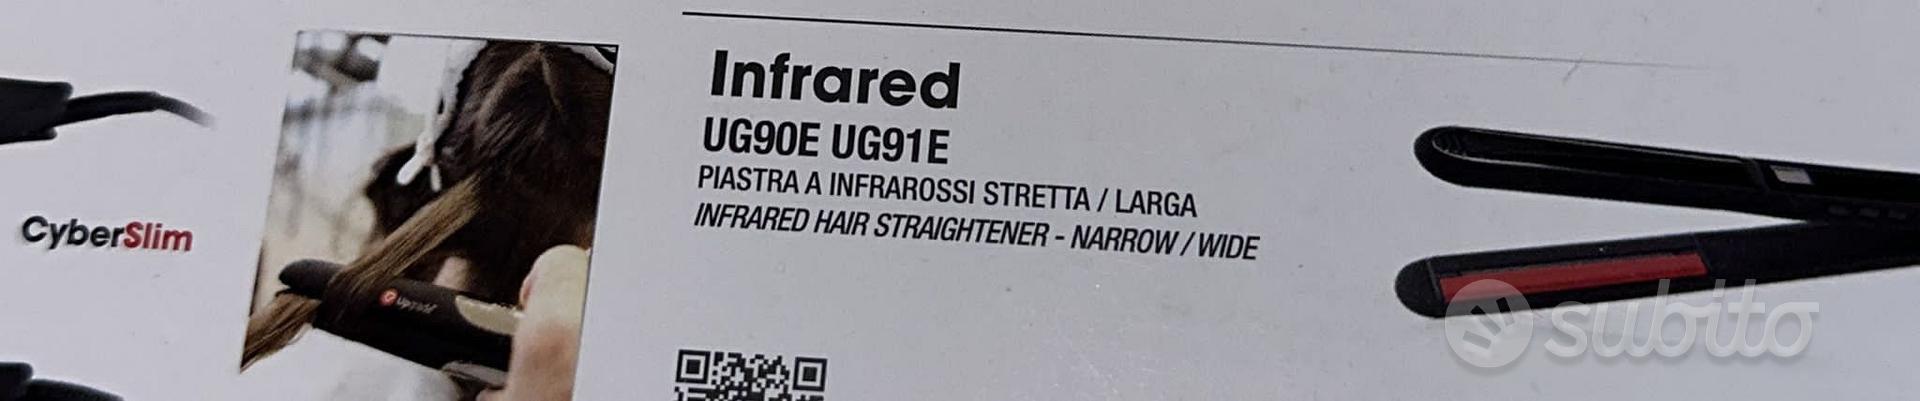 UG91E - Infrared Large Piastra Professionale